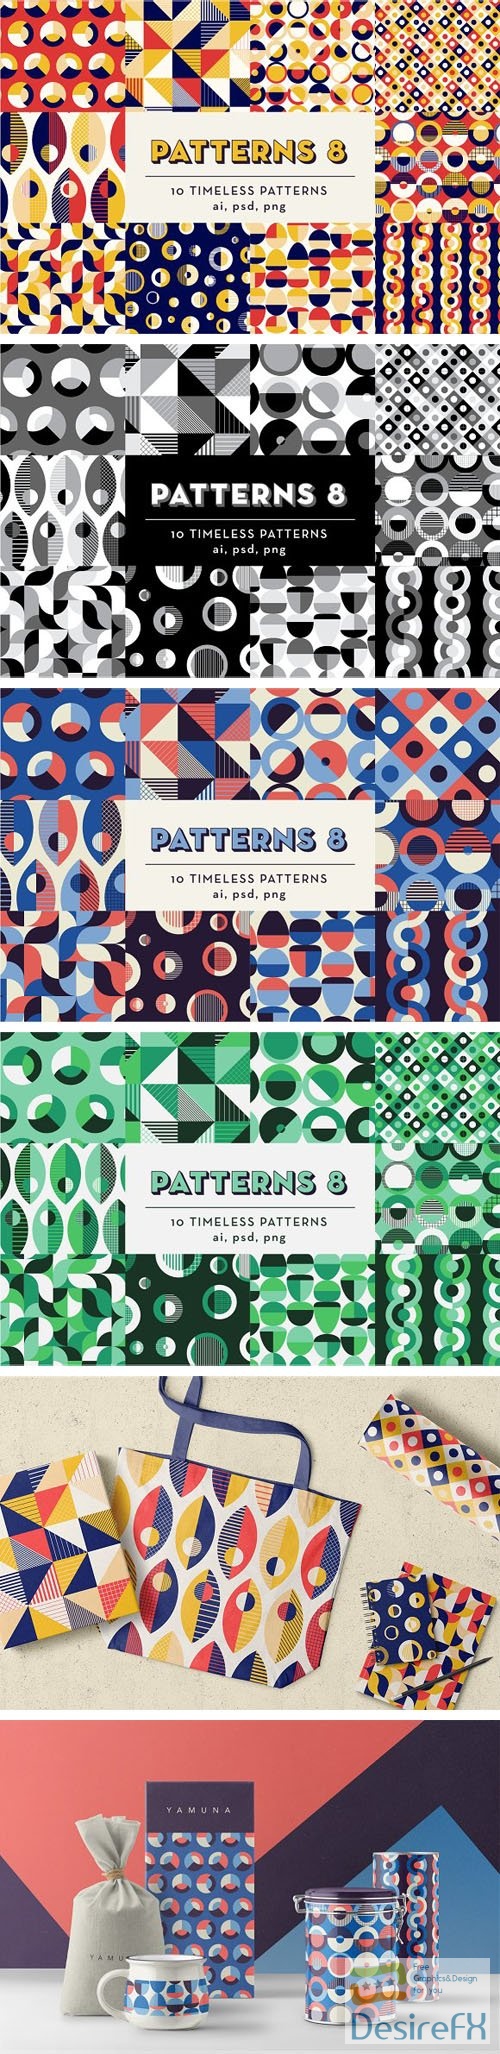 40 Geometric Patterns for Photoshop & Illustrator